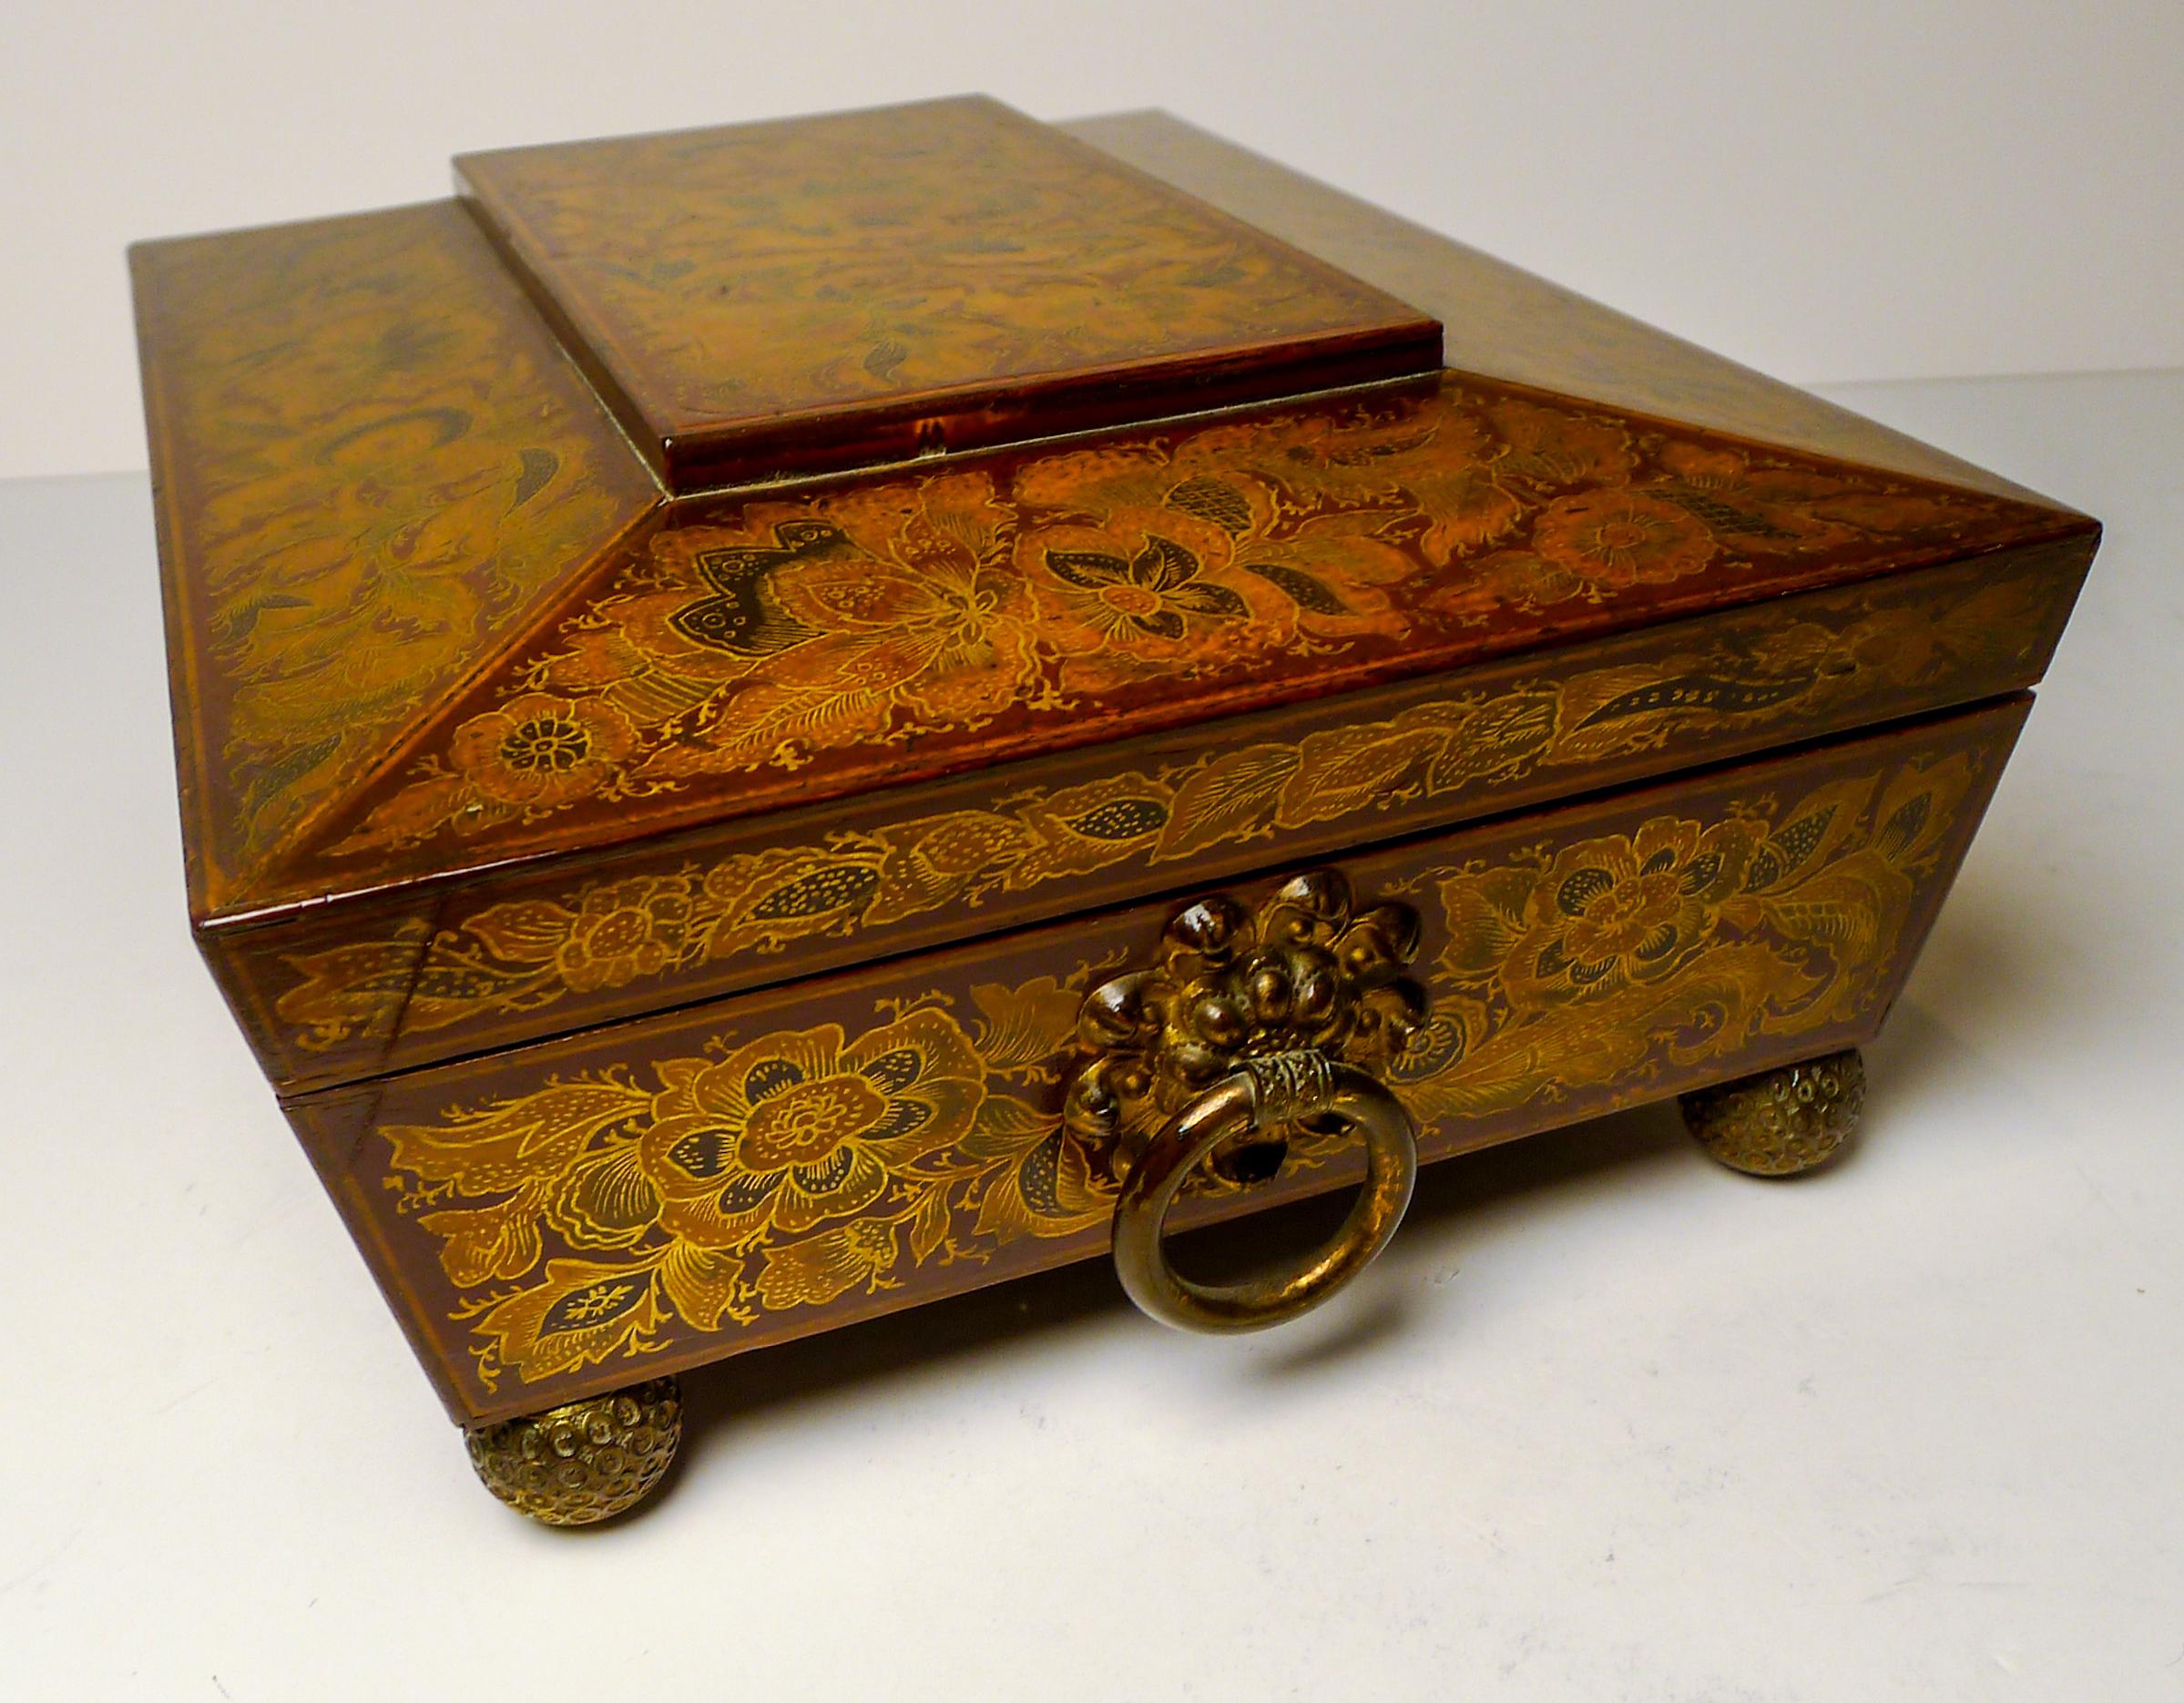 Atemberaubende antike englische Regency Penwork Games Box c.1820 (19. Jahrhundert) im Angebot